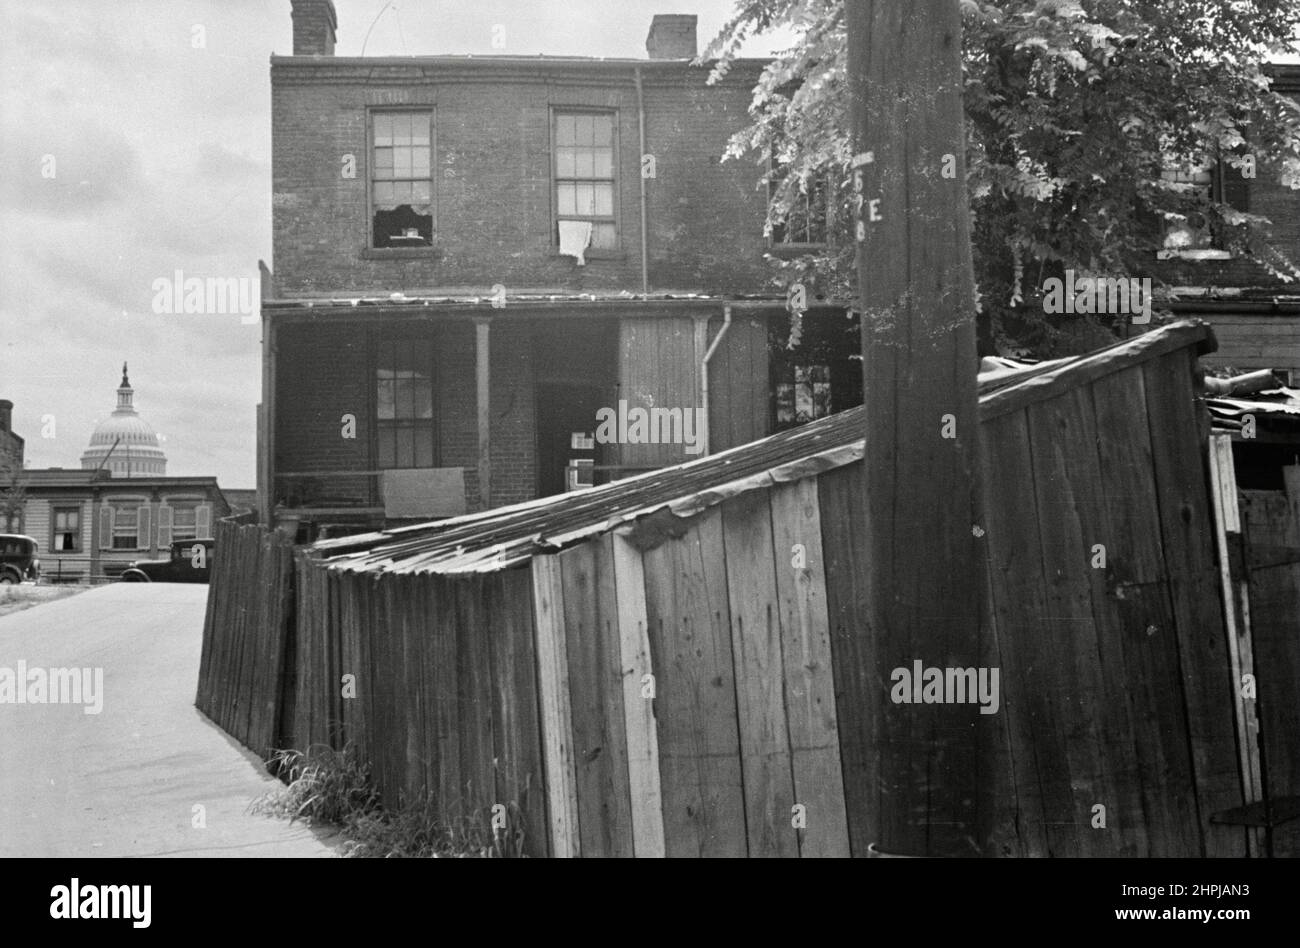 Carl Mydans - Slum accommodation in view of The White House, washington, USA - 1935 Stock Photo